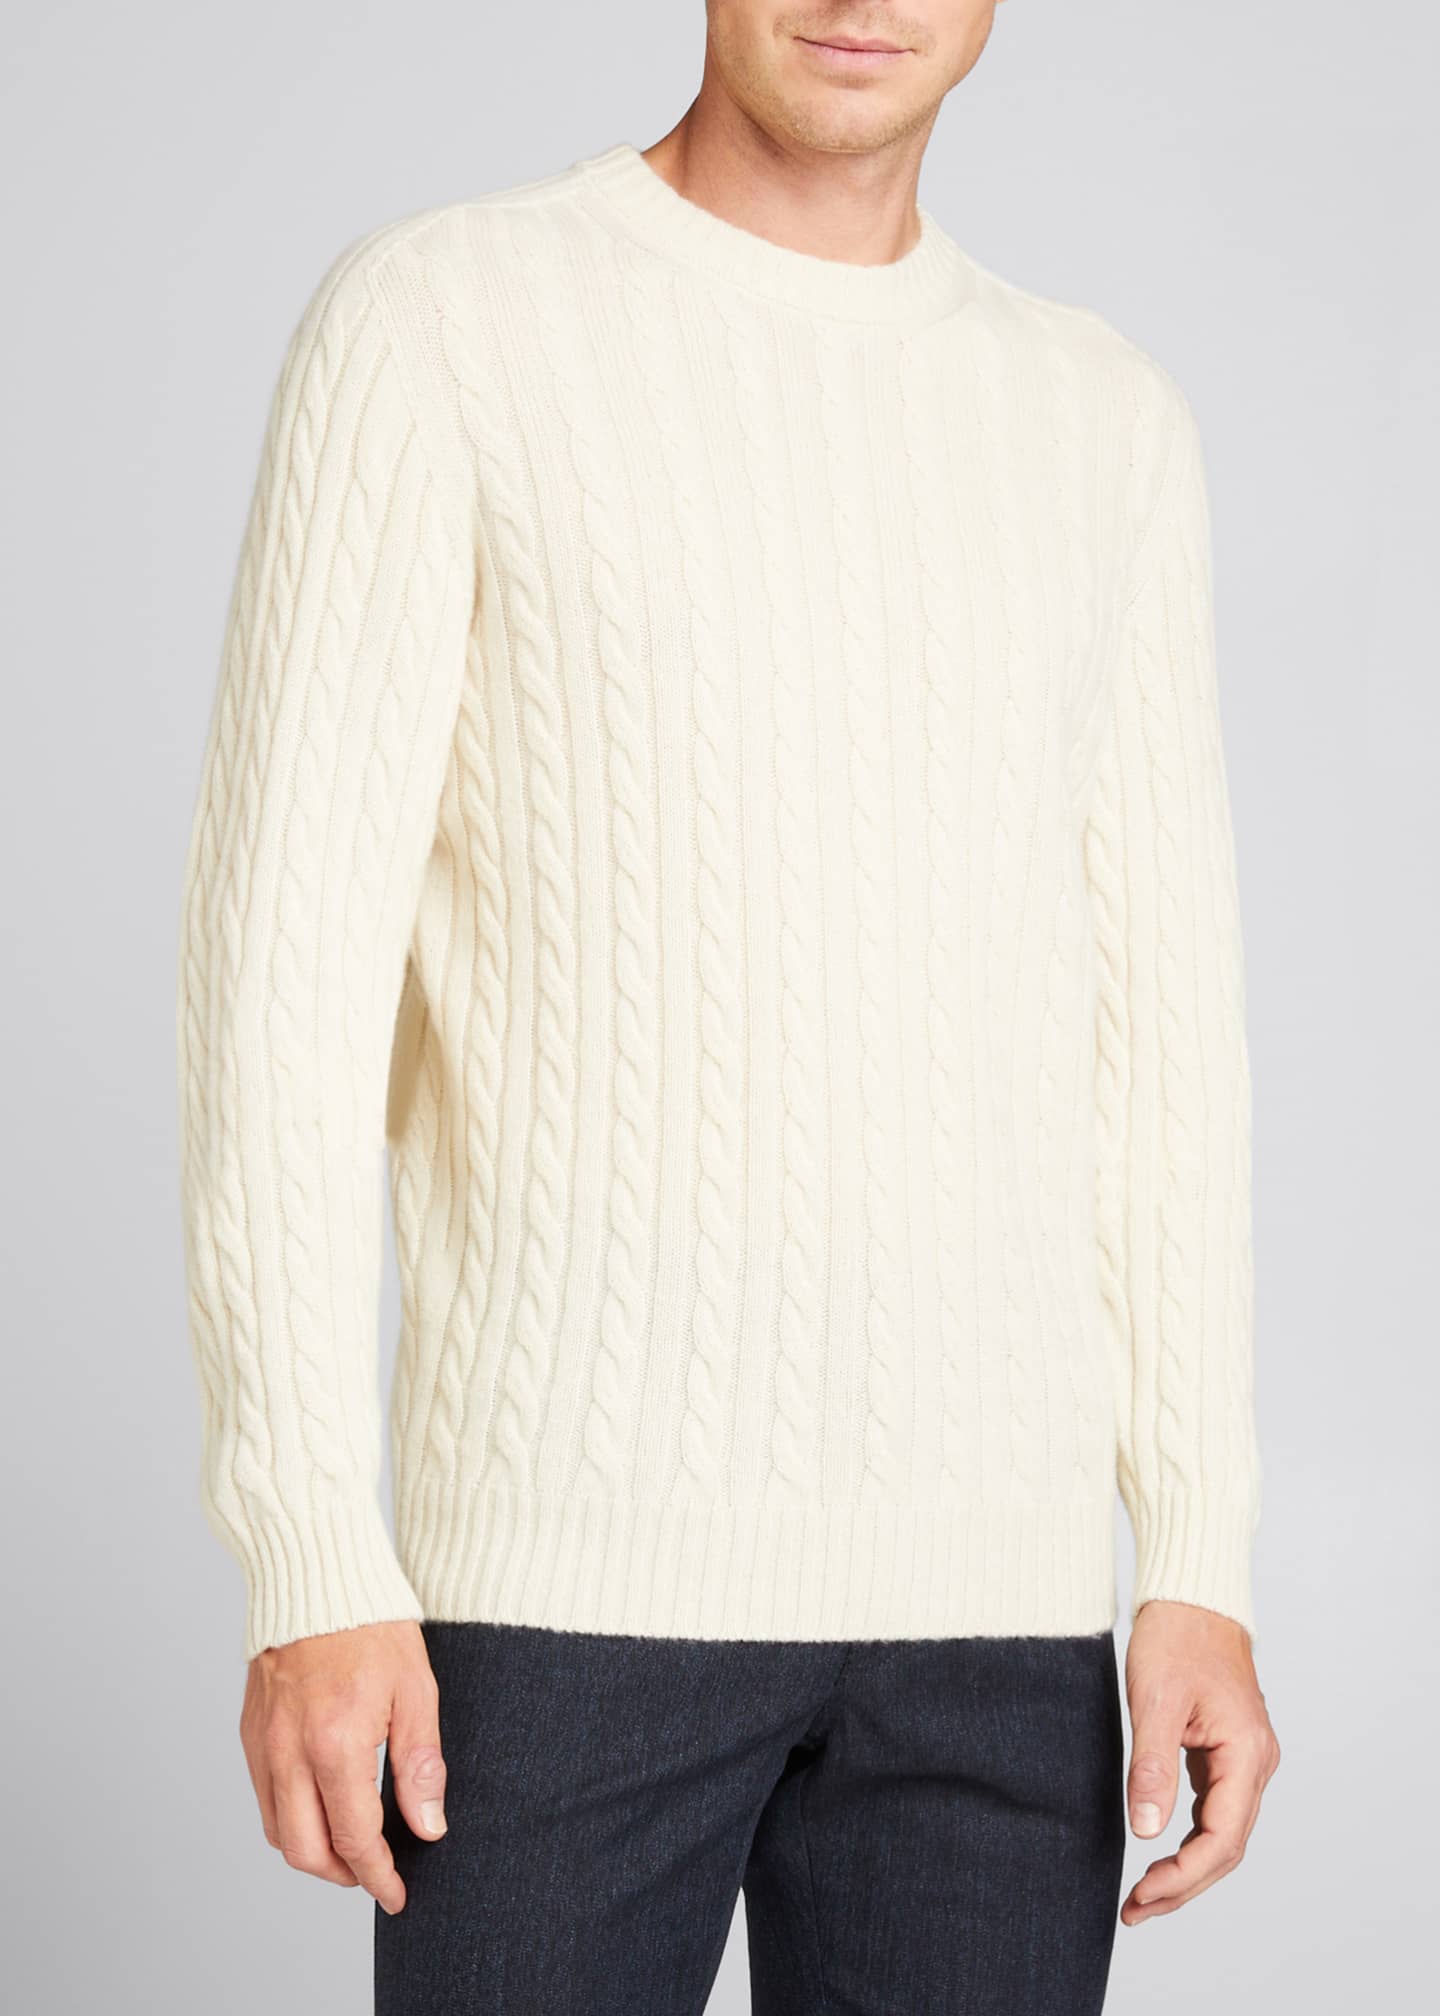 Brioni Men's Cable-Knit Cashmere Sweater - Bergdorf Goodman